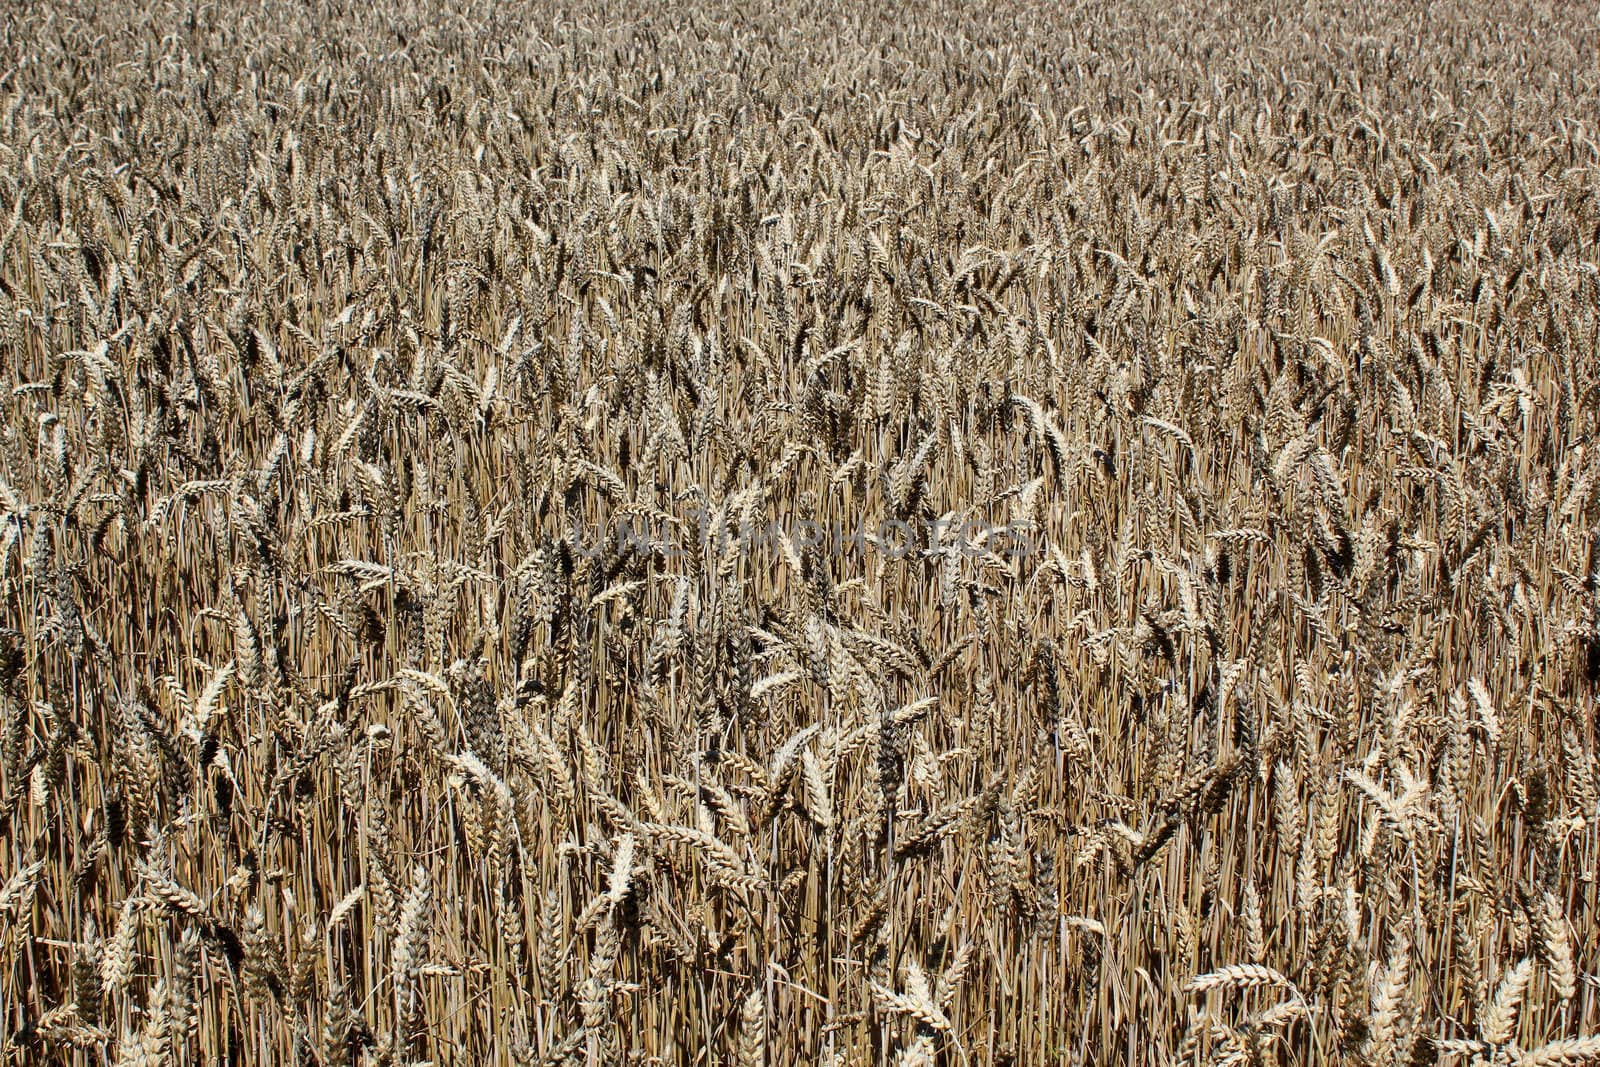 Gold wheat field by Elenaphotos21